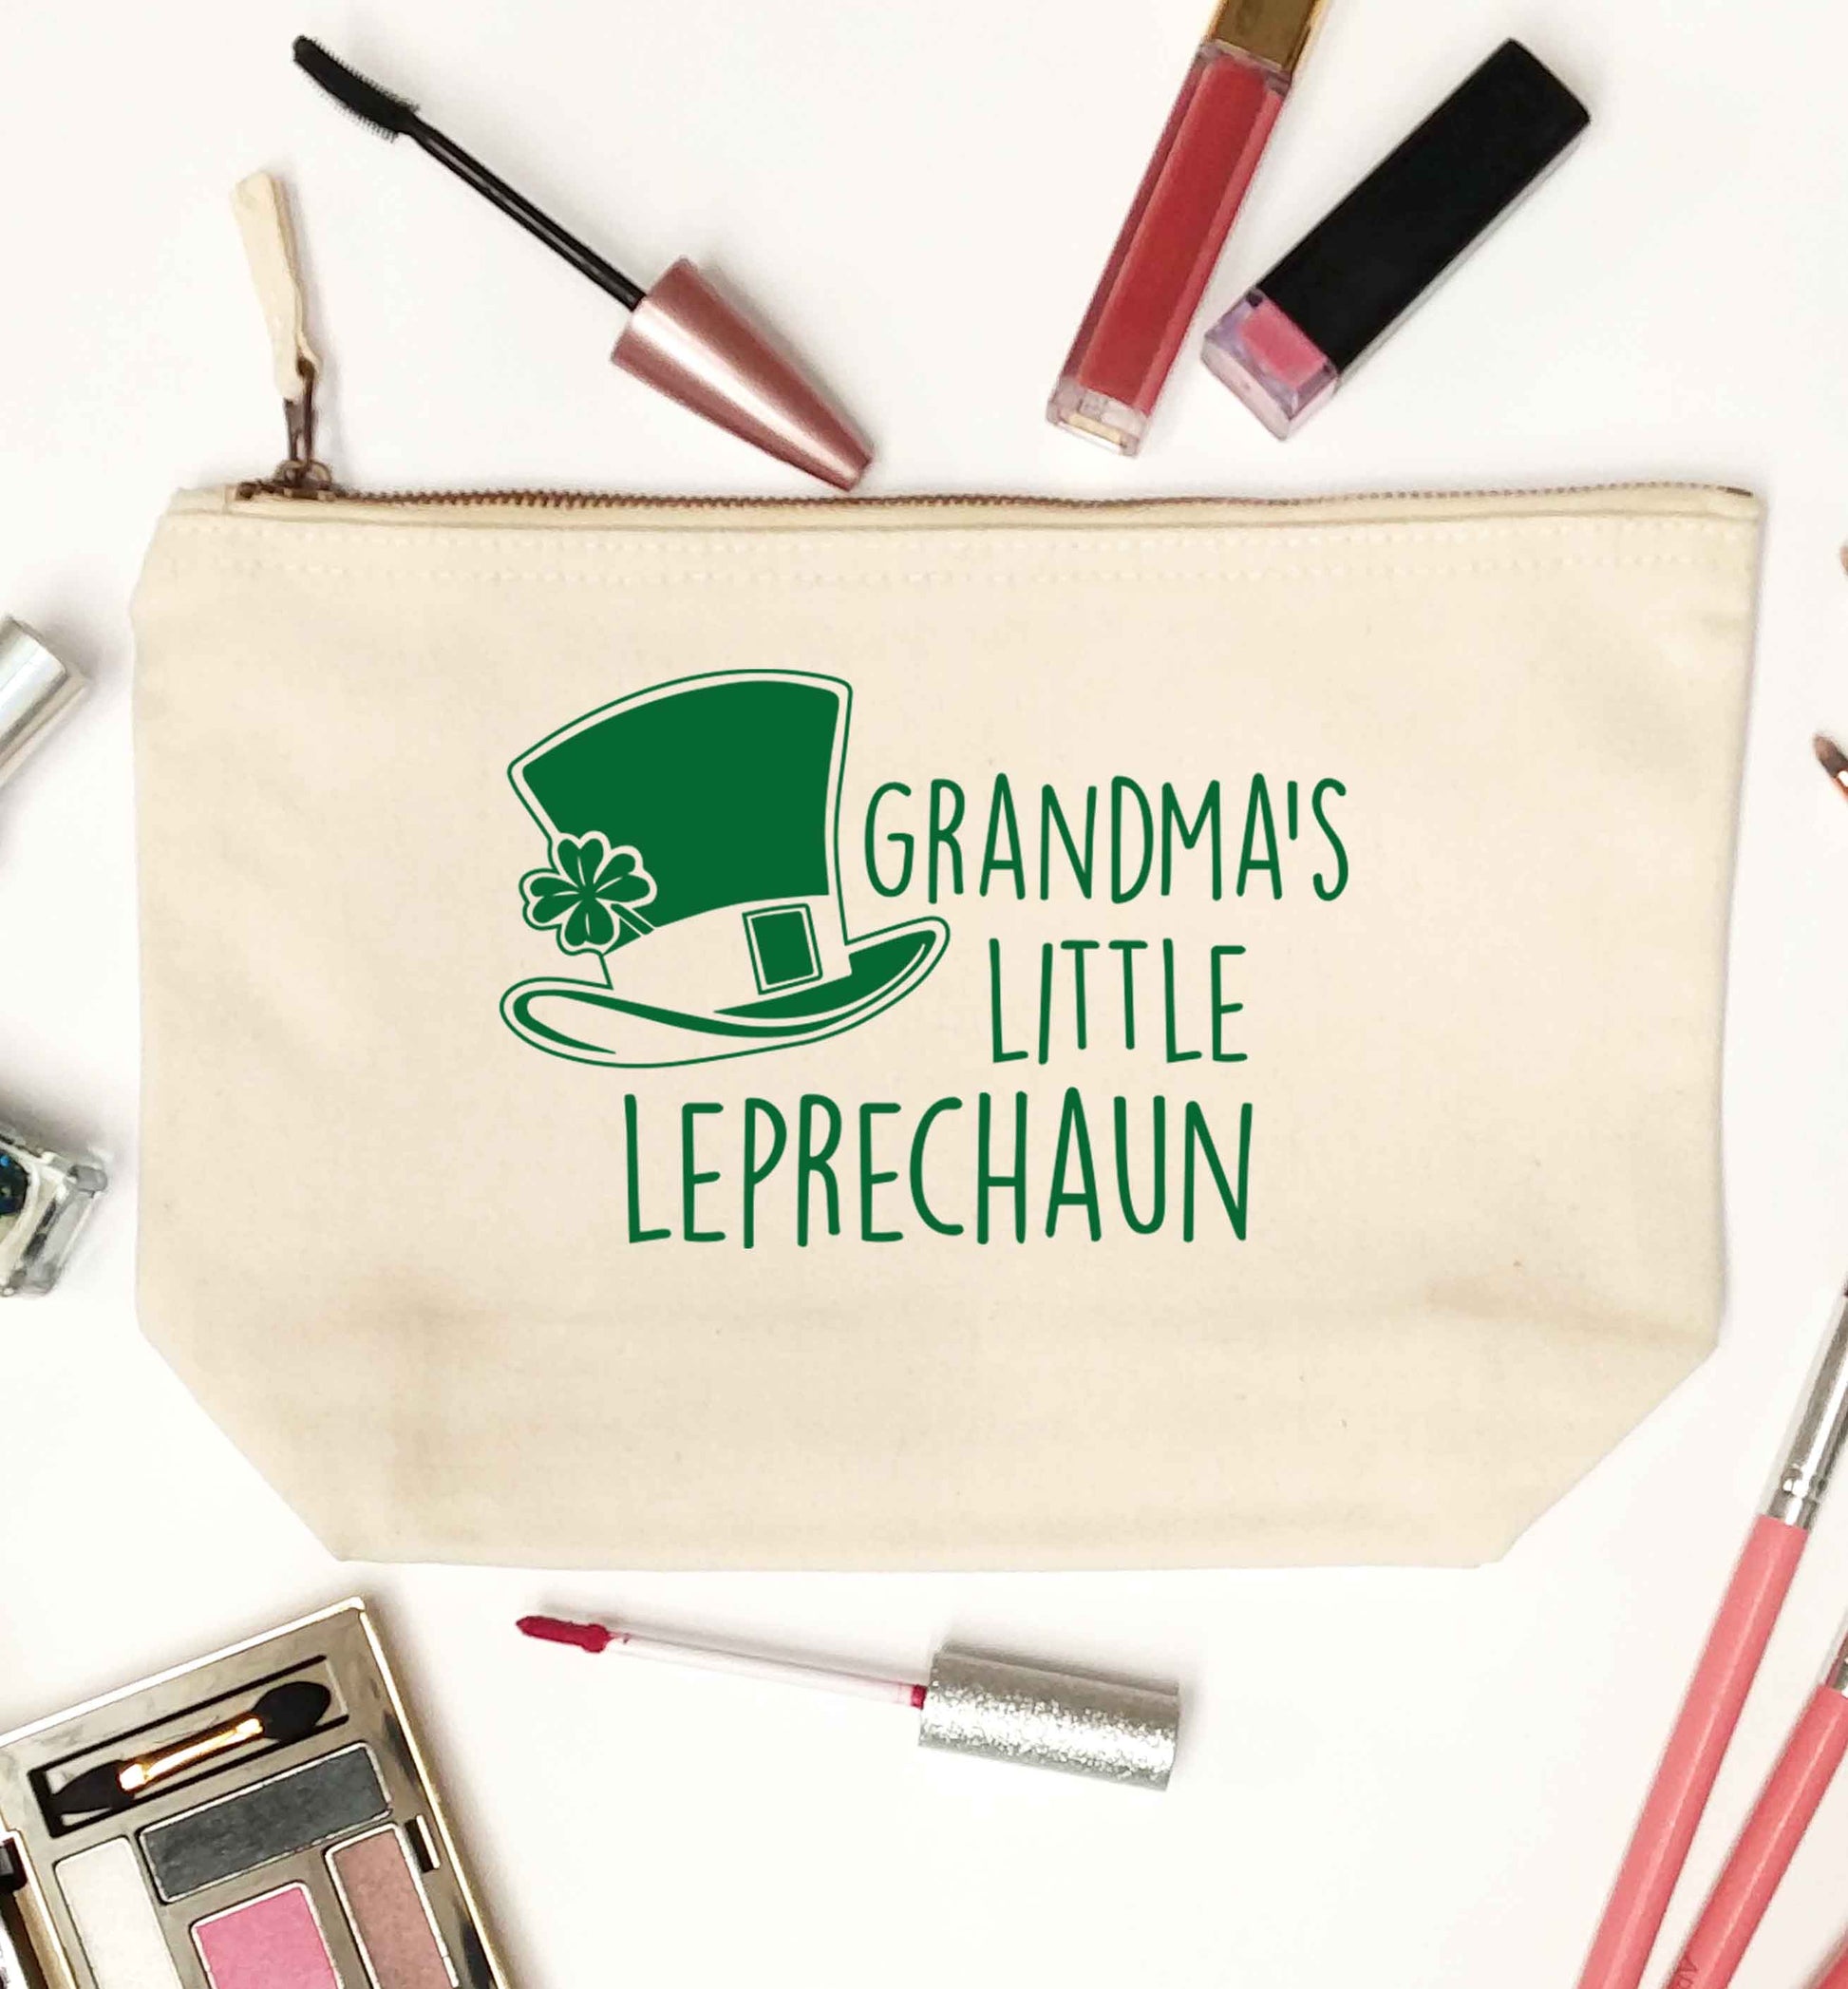 Grandma's little leprechaun natural makeup bag